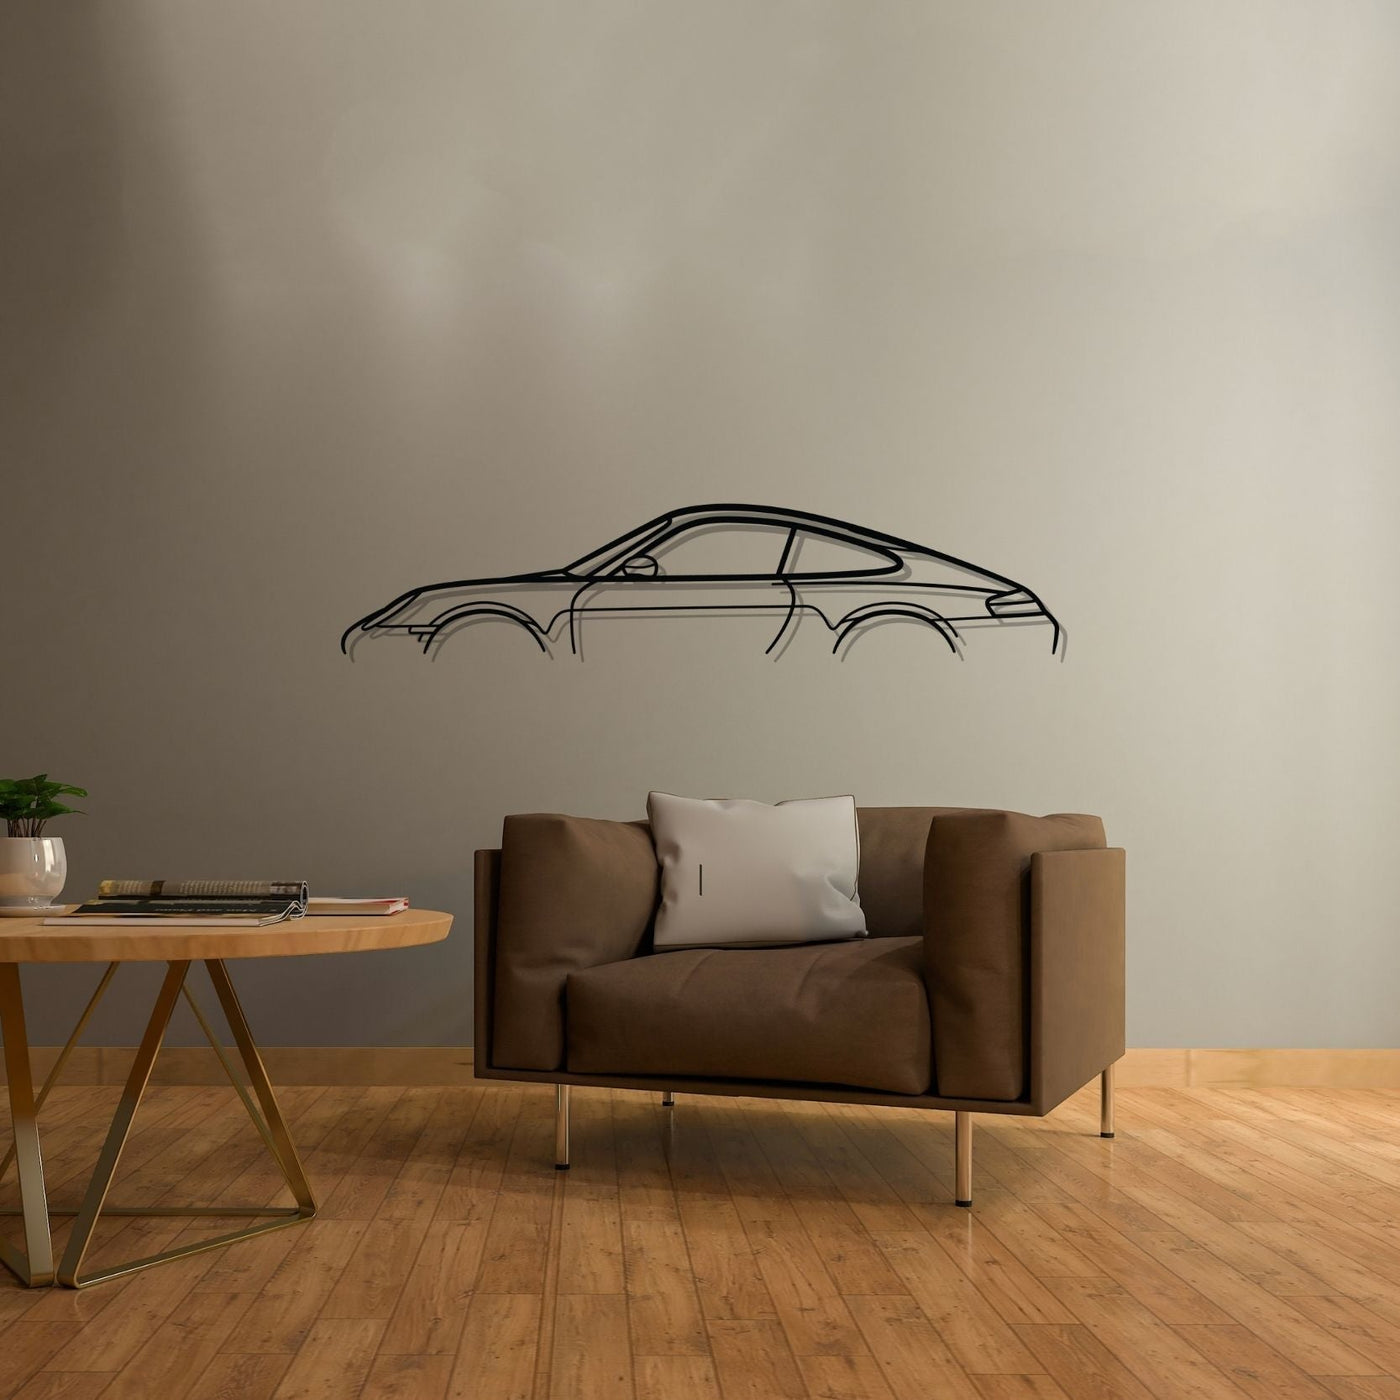 911 Model 996 Classic Metal Silhouette Wall Art